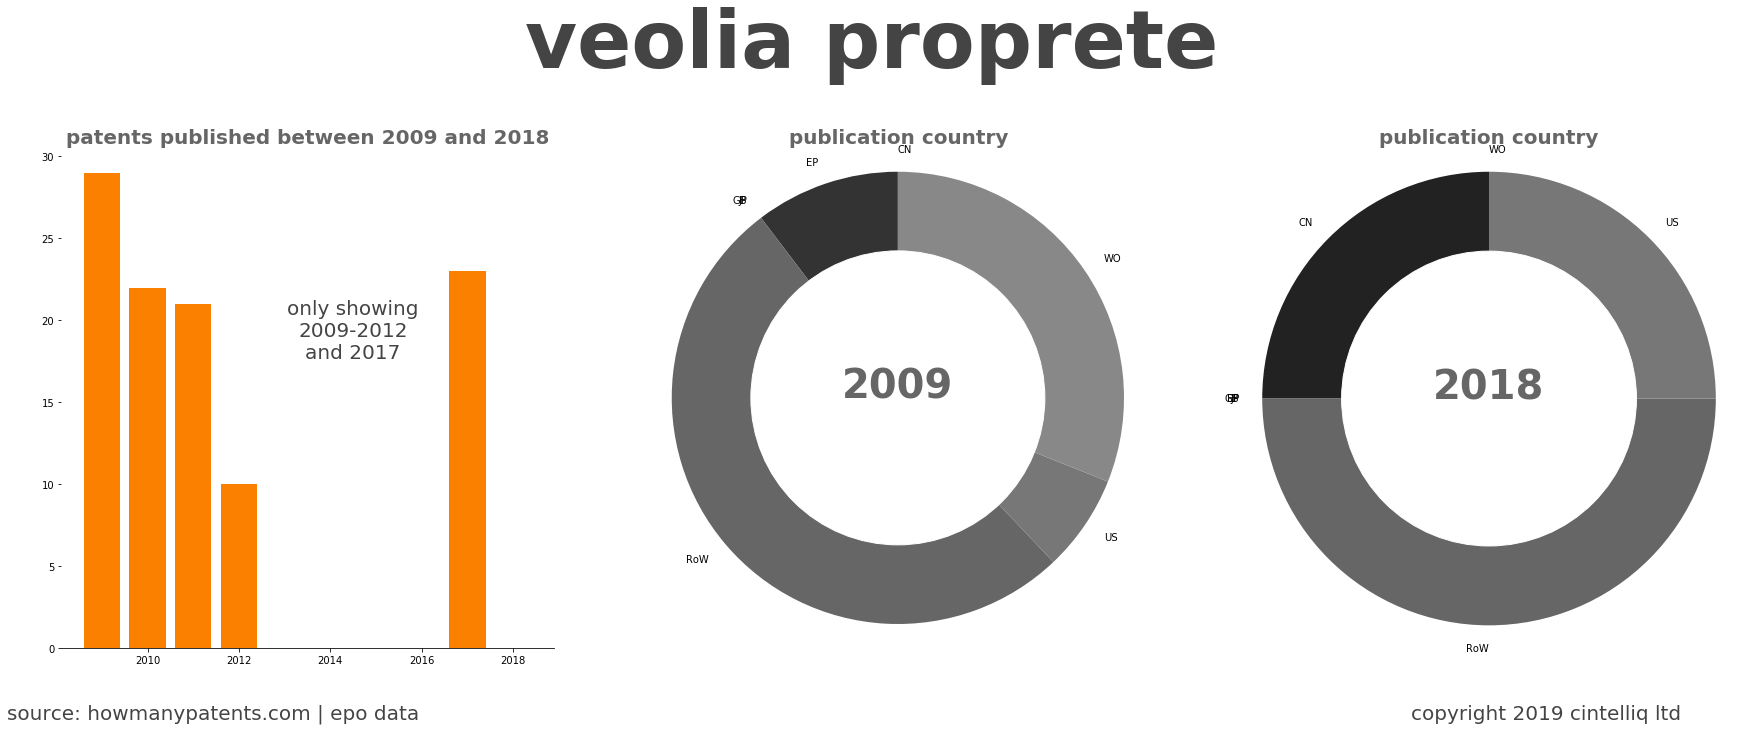 summary of patents for Veolia Proprete